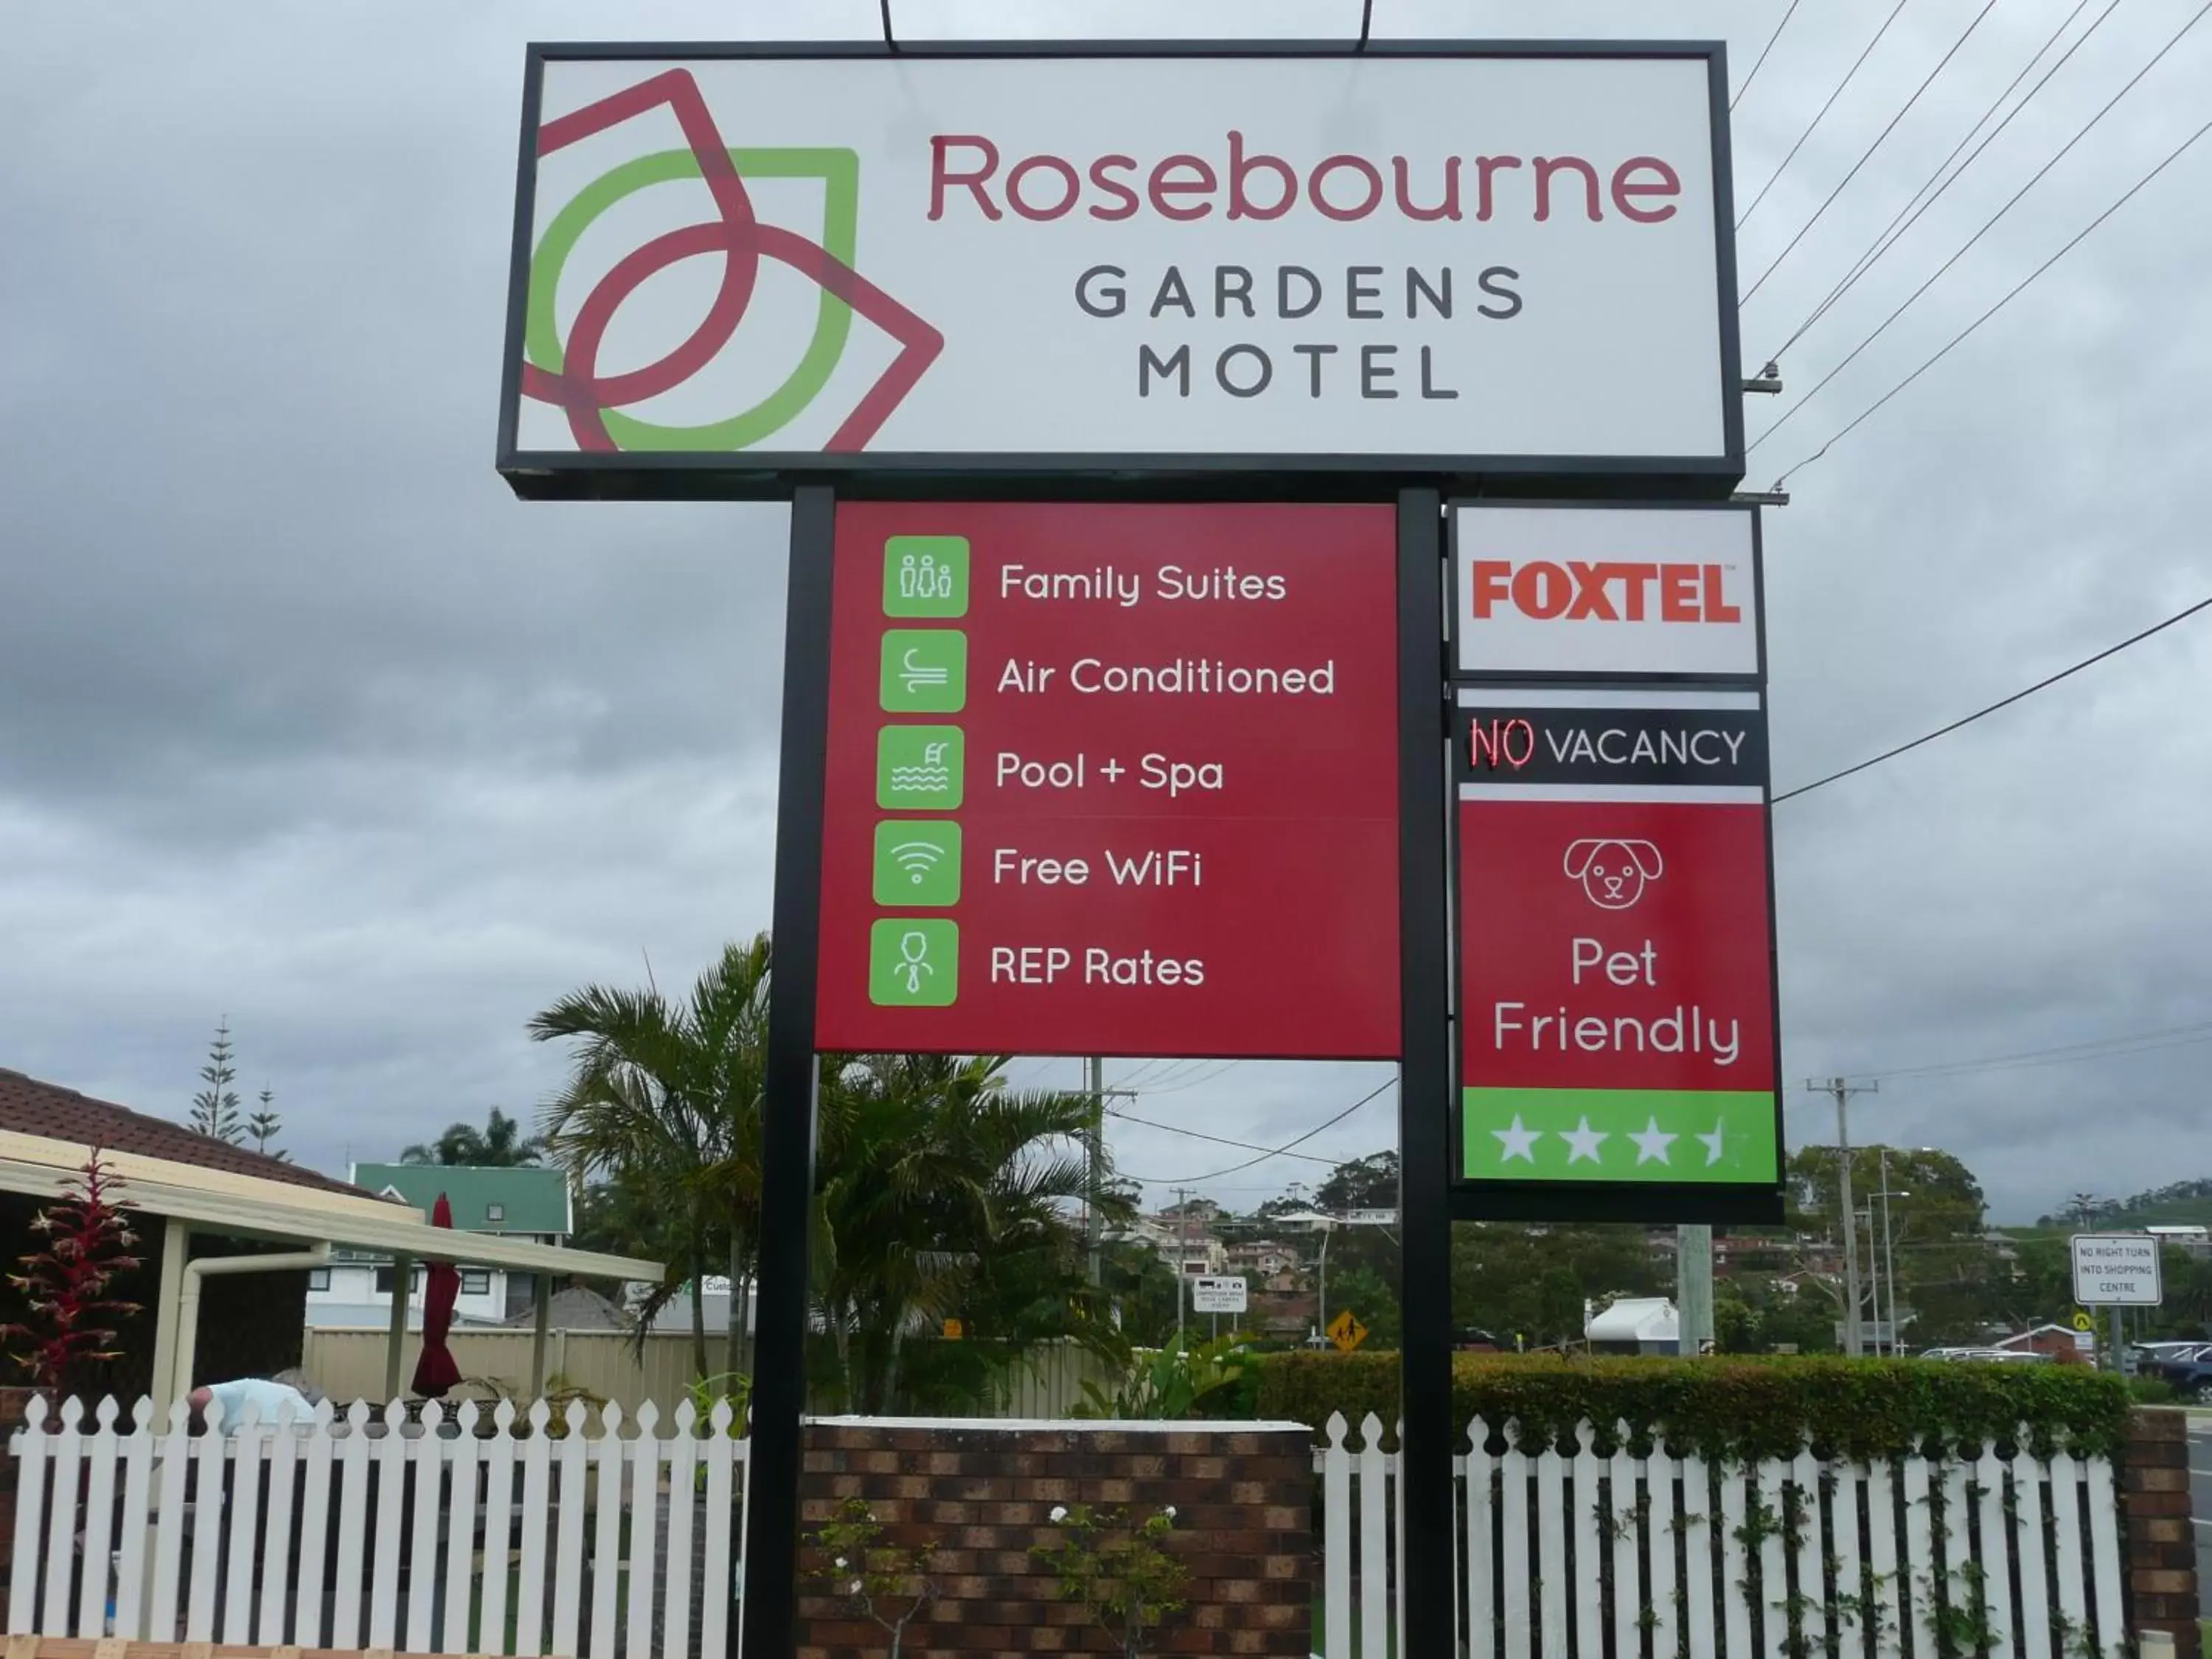 Property logo or sign in Rosebourne Gardens Motel